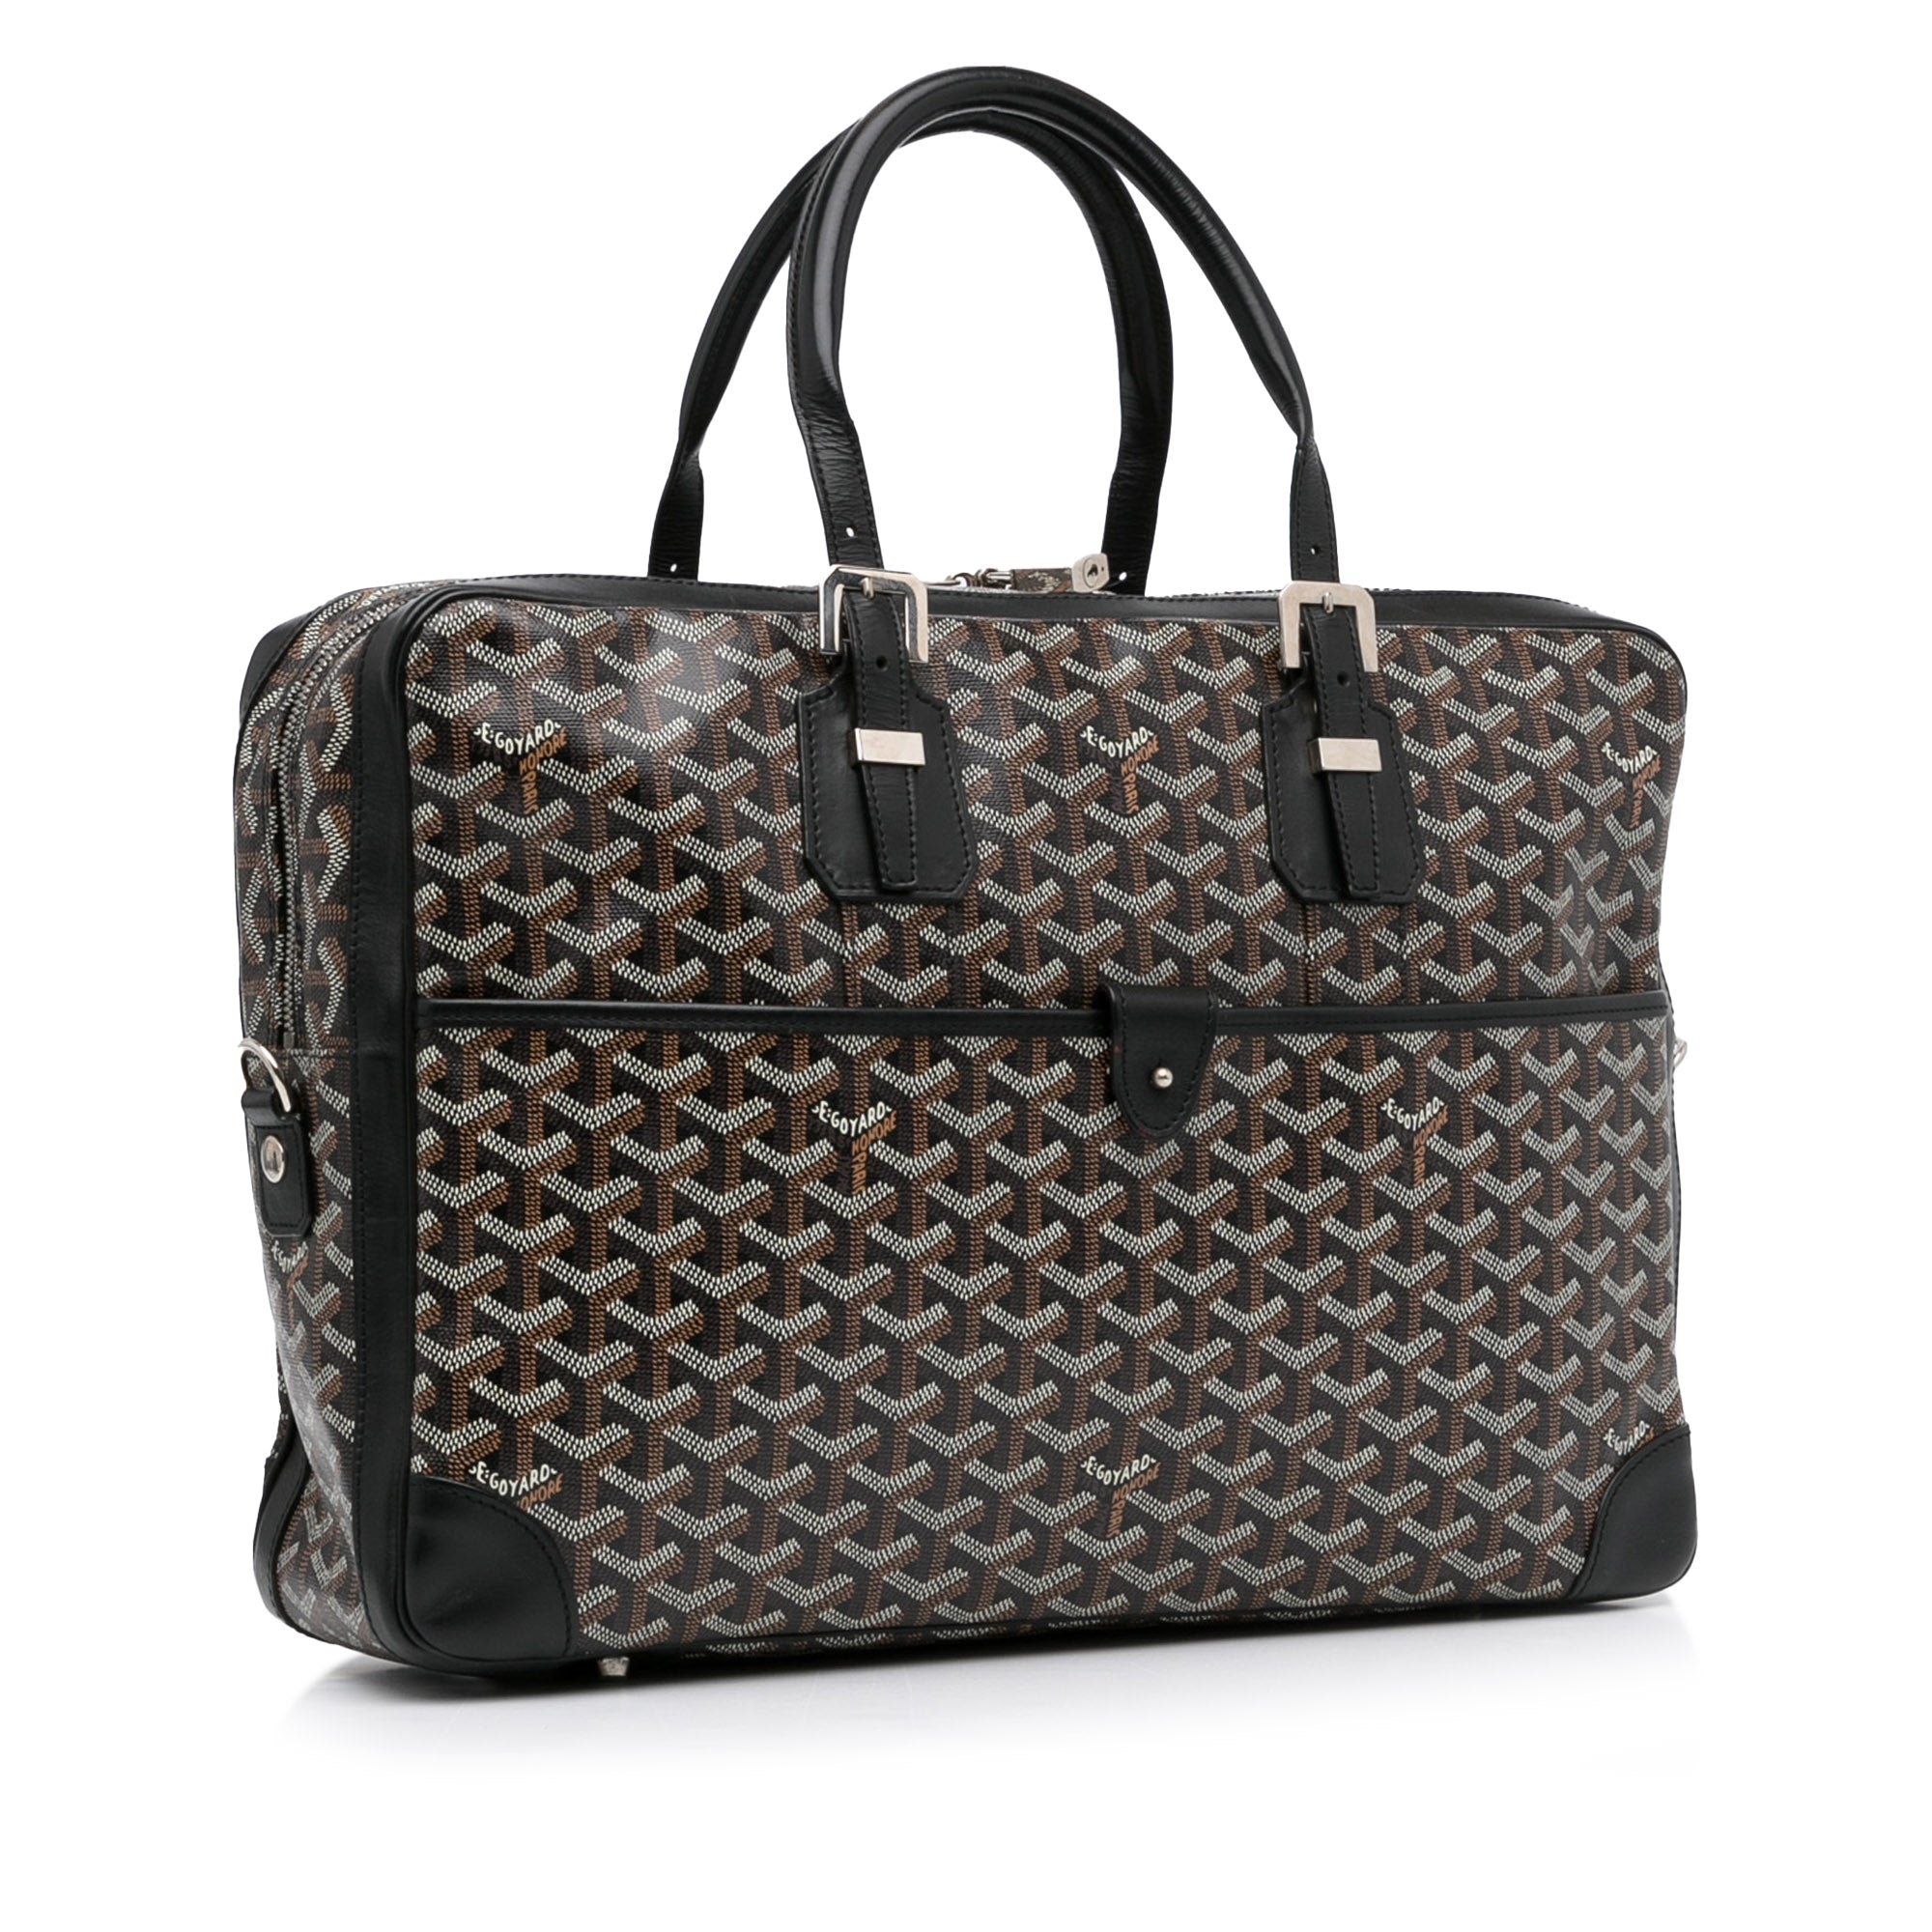 Goyard Tote Black Bags & Handbags for Women, Authenticity Guaranteed